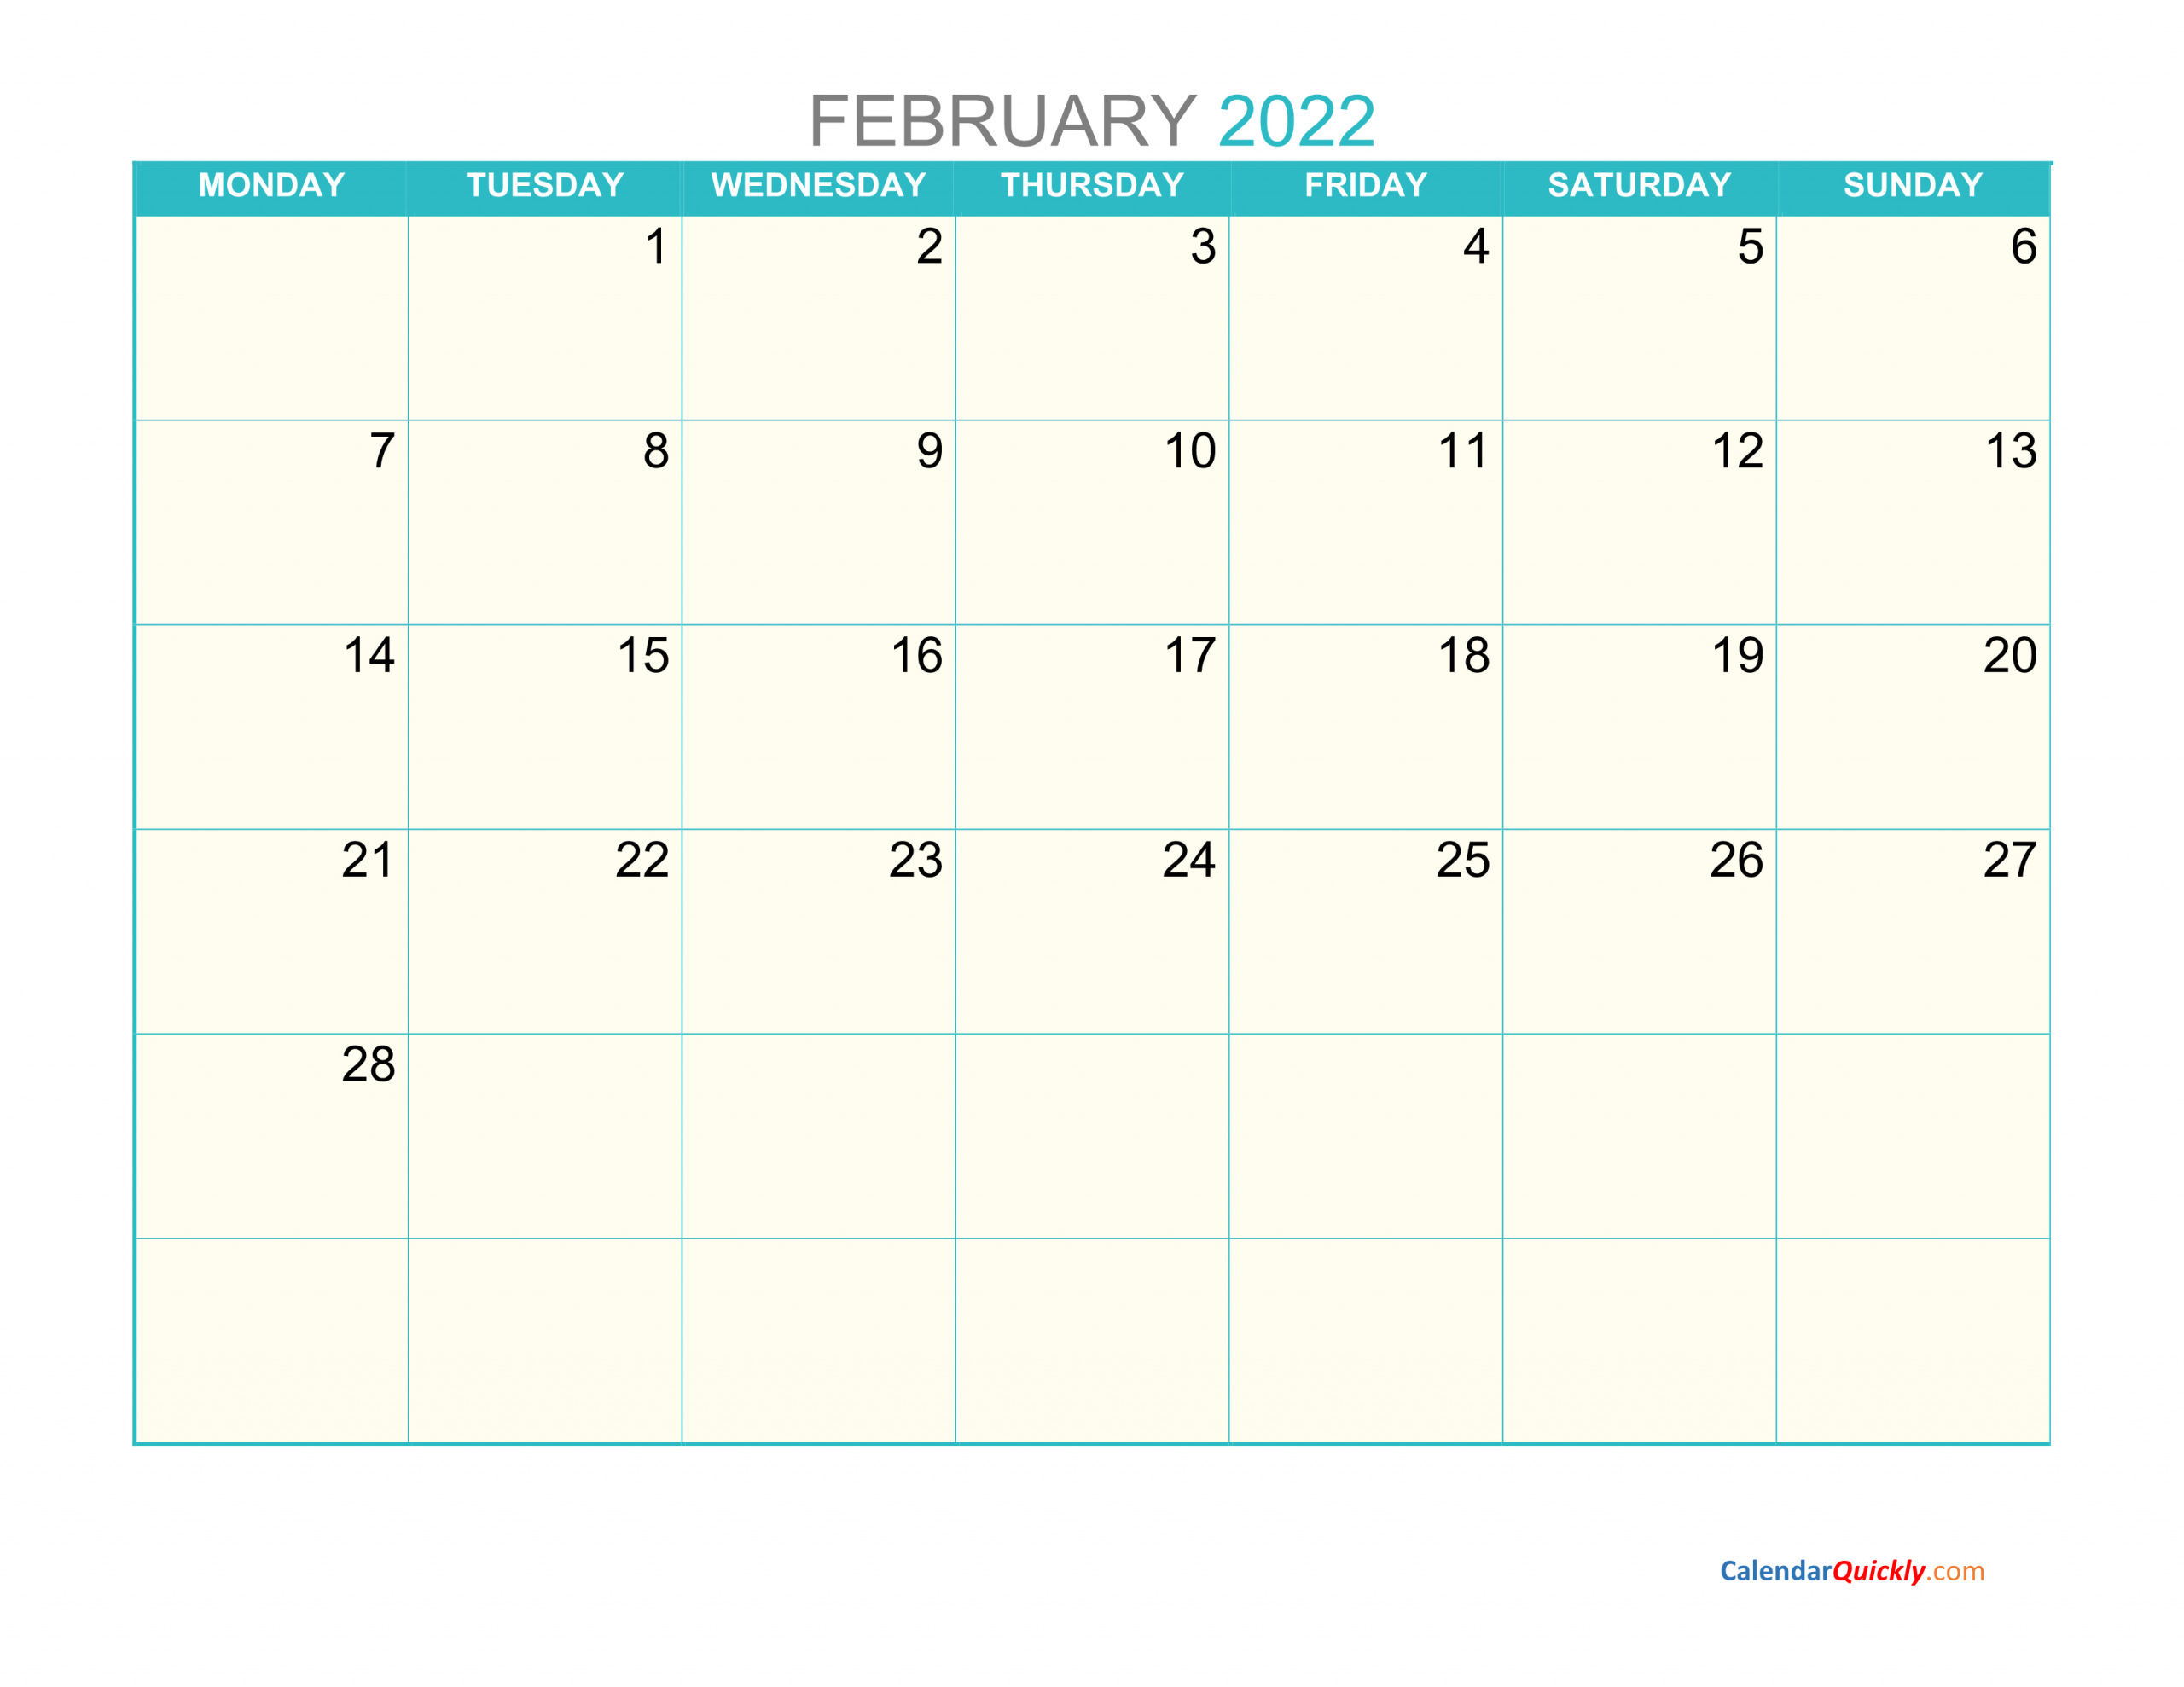 February Monday 2022 Calendar Printable Calendar Quickly 1